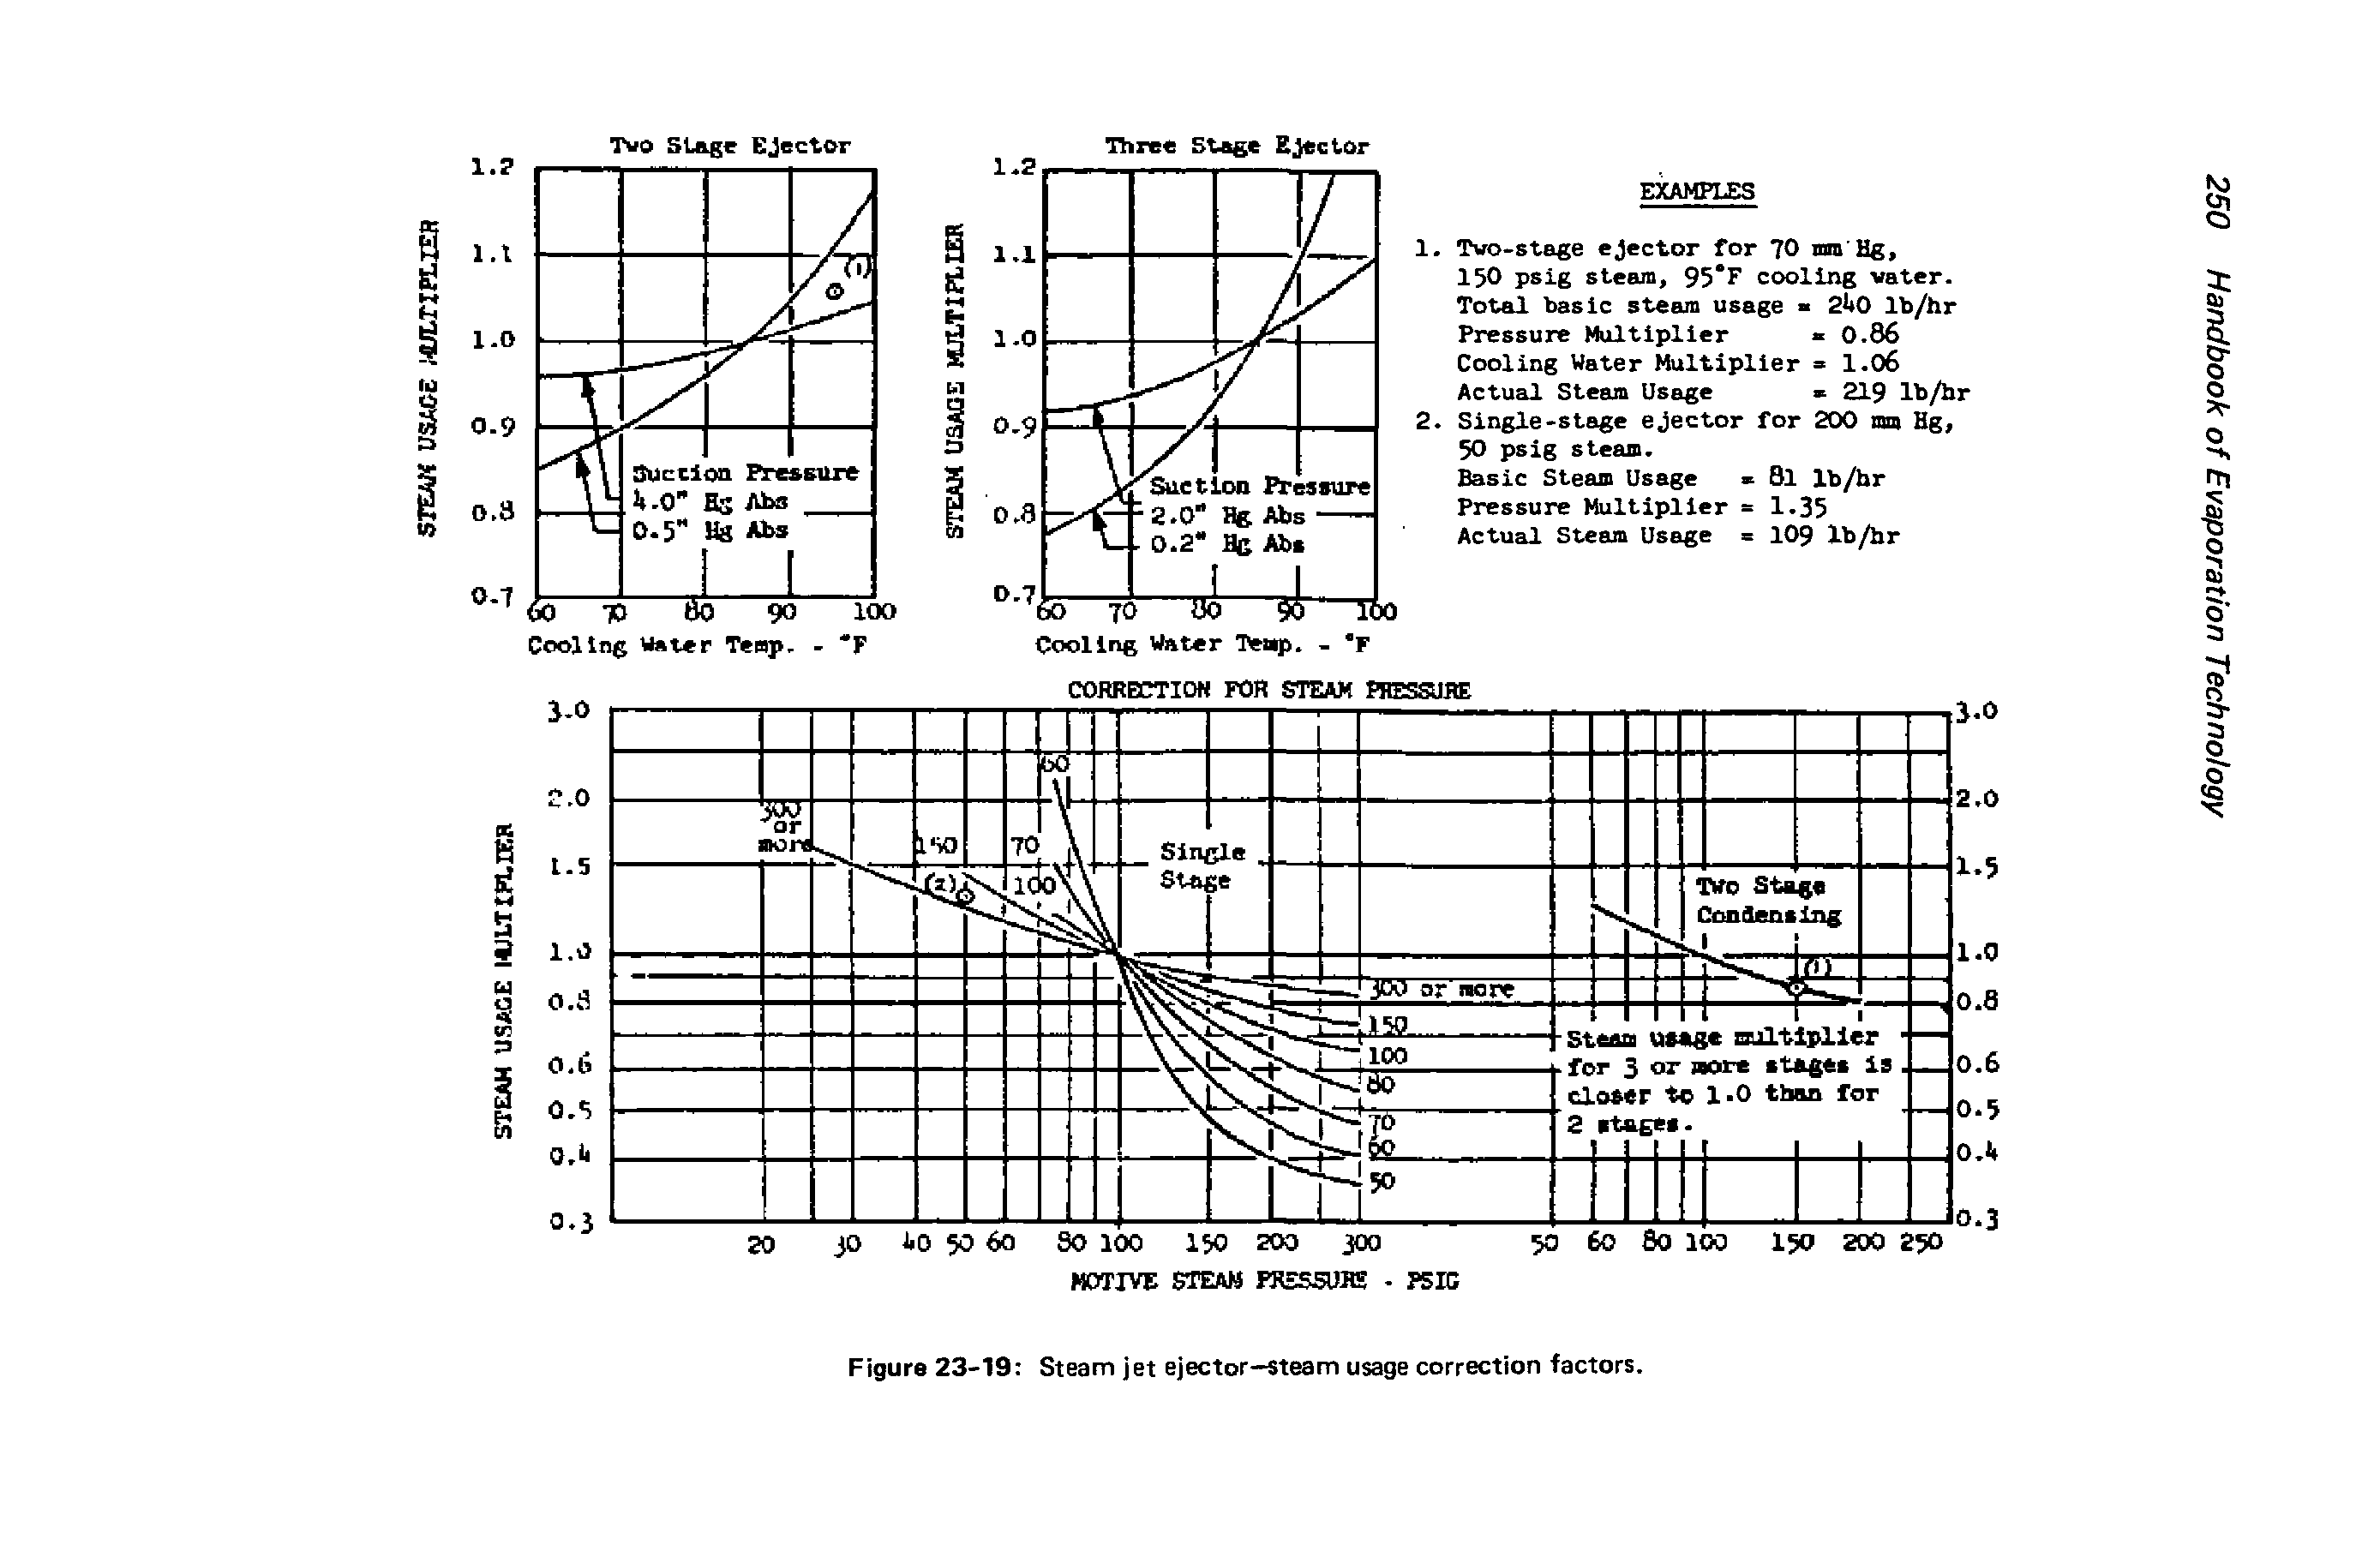 Figure 23-19 Steam jet ejector—steam usage correction factors.